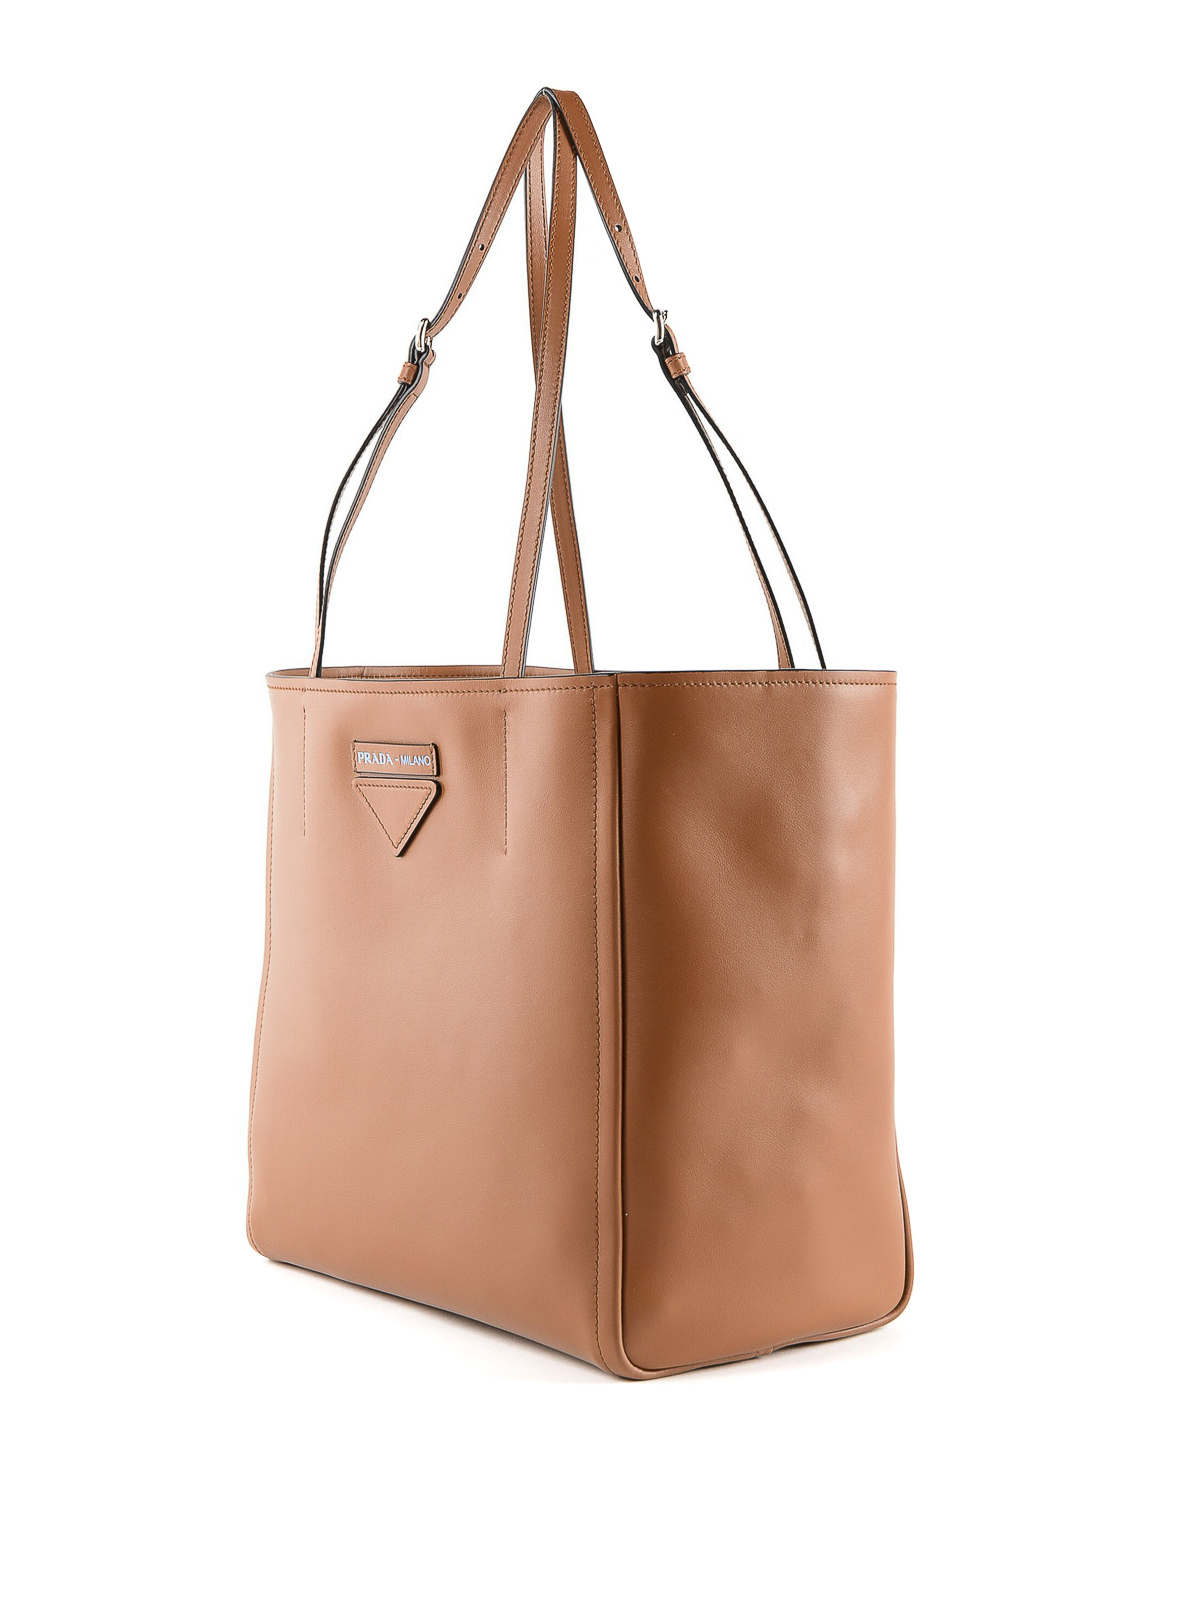 Prada - Concept small leather tote bag 